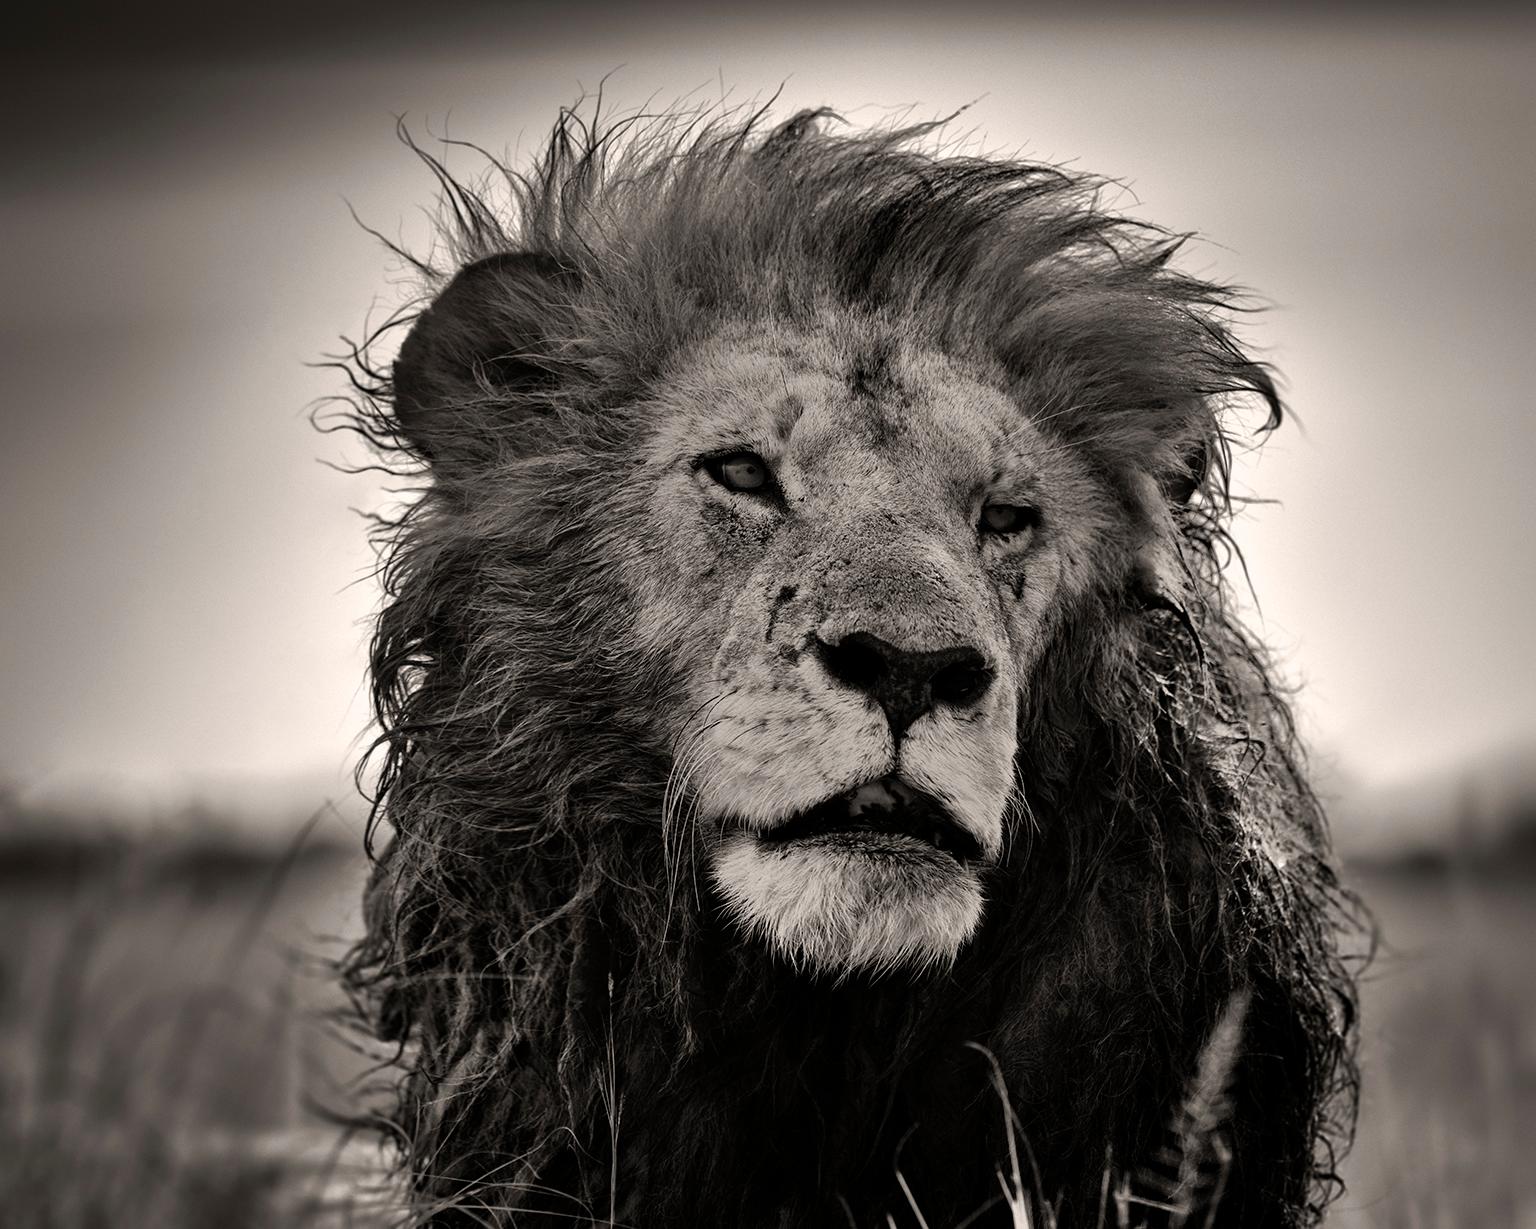 Joachim Schmeisser Black and White Photograph - Last Warrior, Kenya, Lion, animal, wildlife, black and white photography